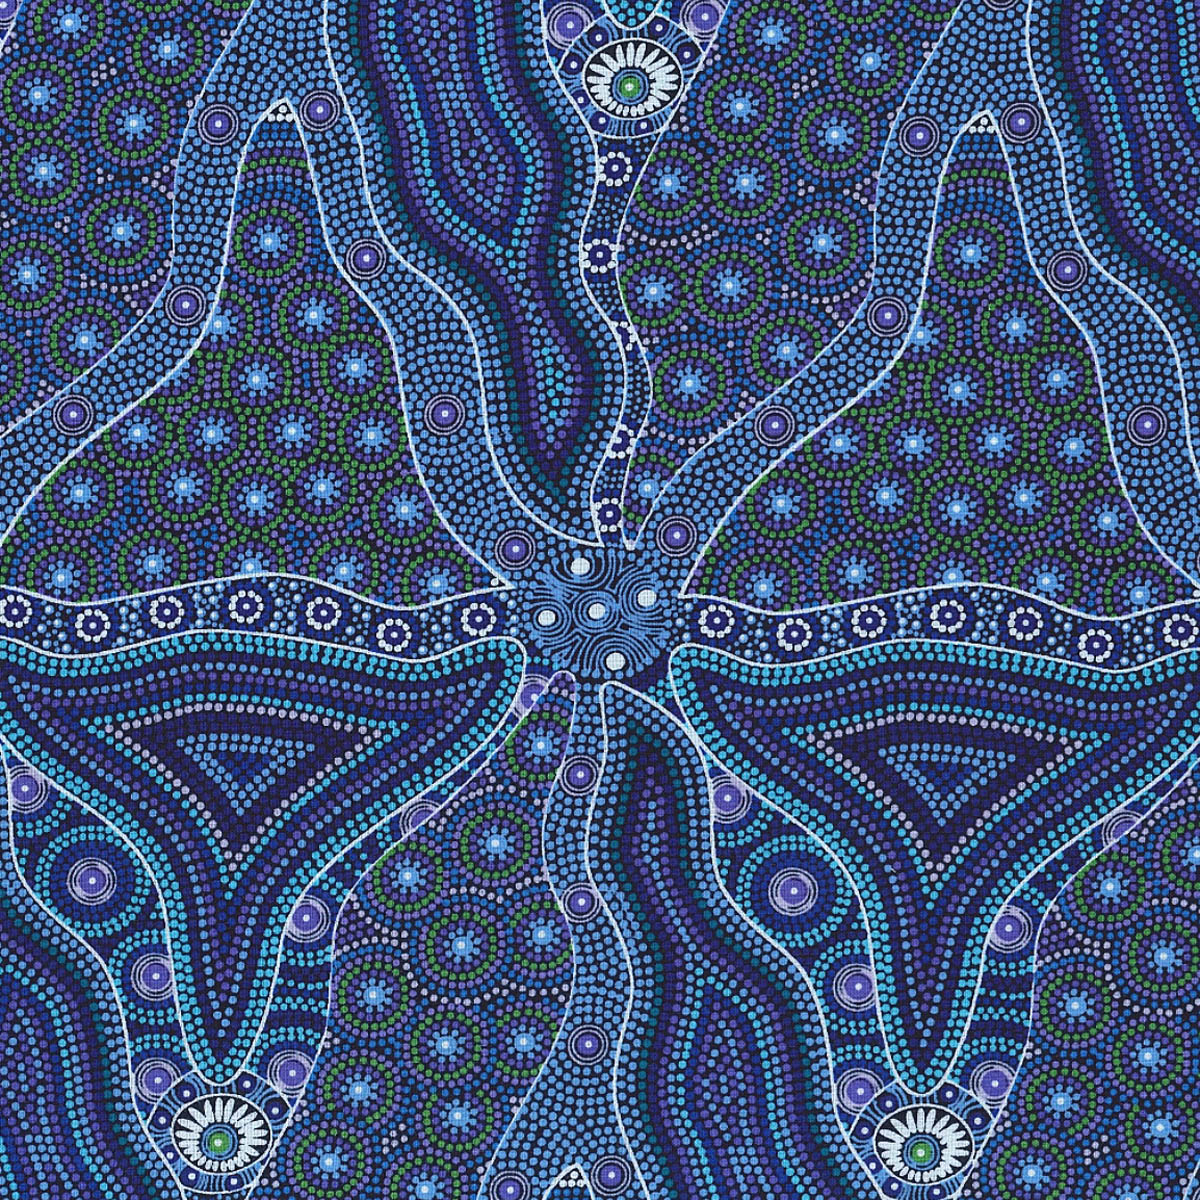 BUSH TOMATO & WATERHOLE BLUE by Aboriginal Artist Cindy Wallace